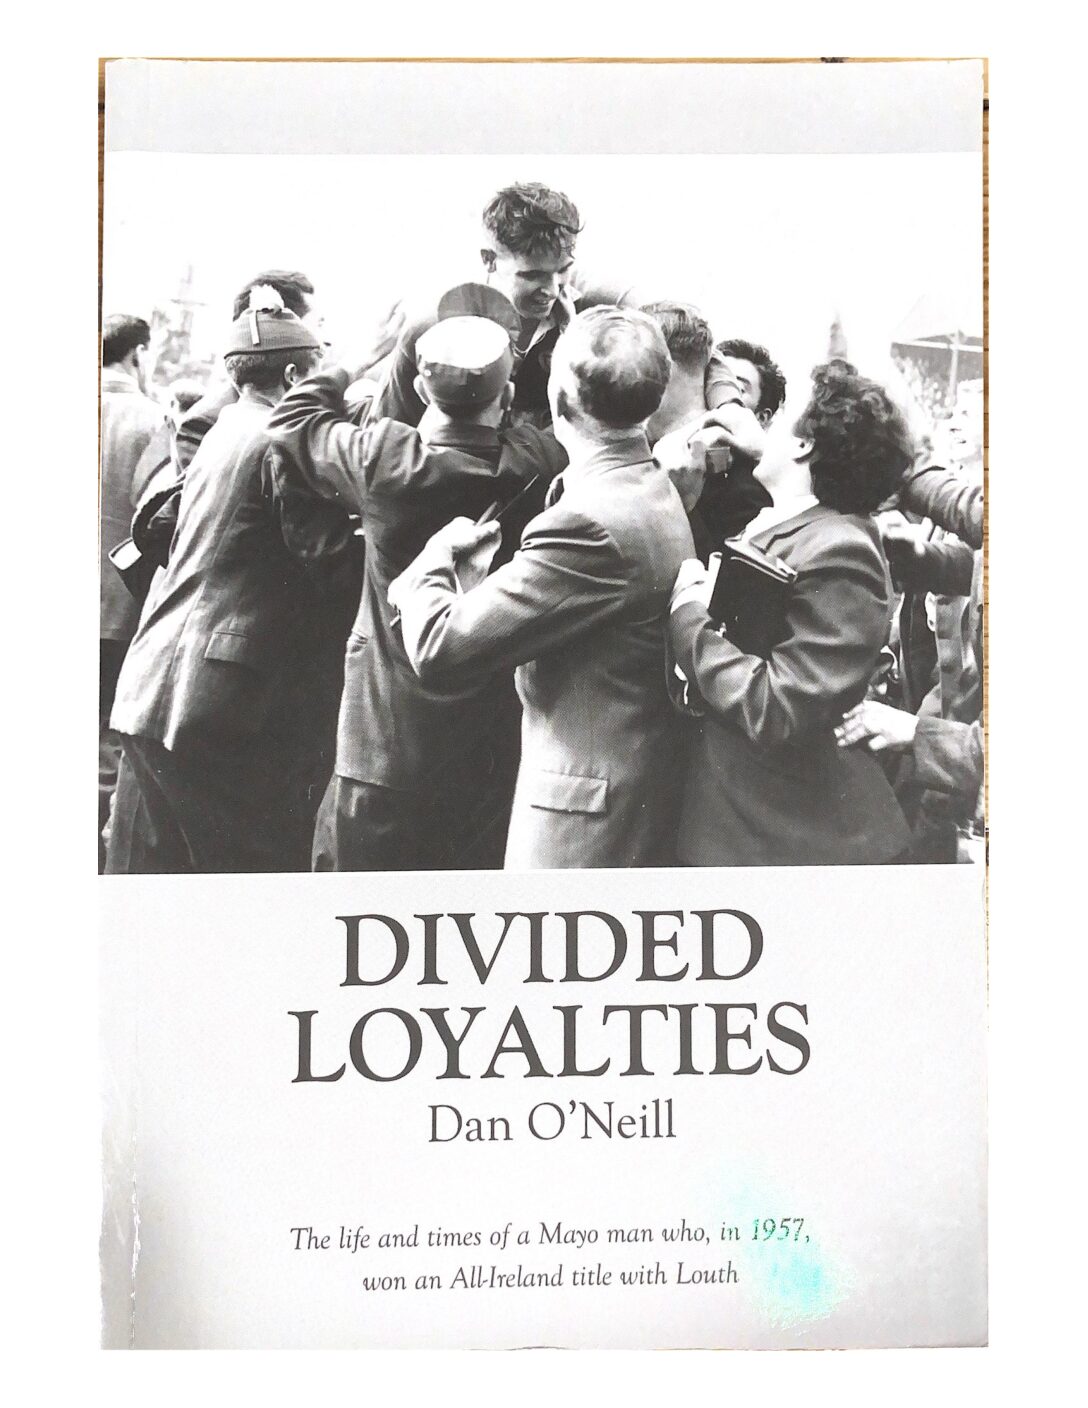 Divided Loyalties by Dan O'Neill